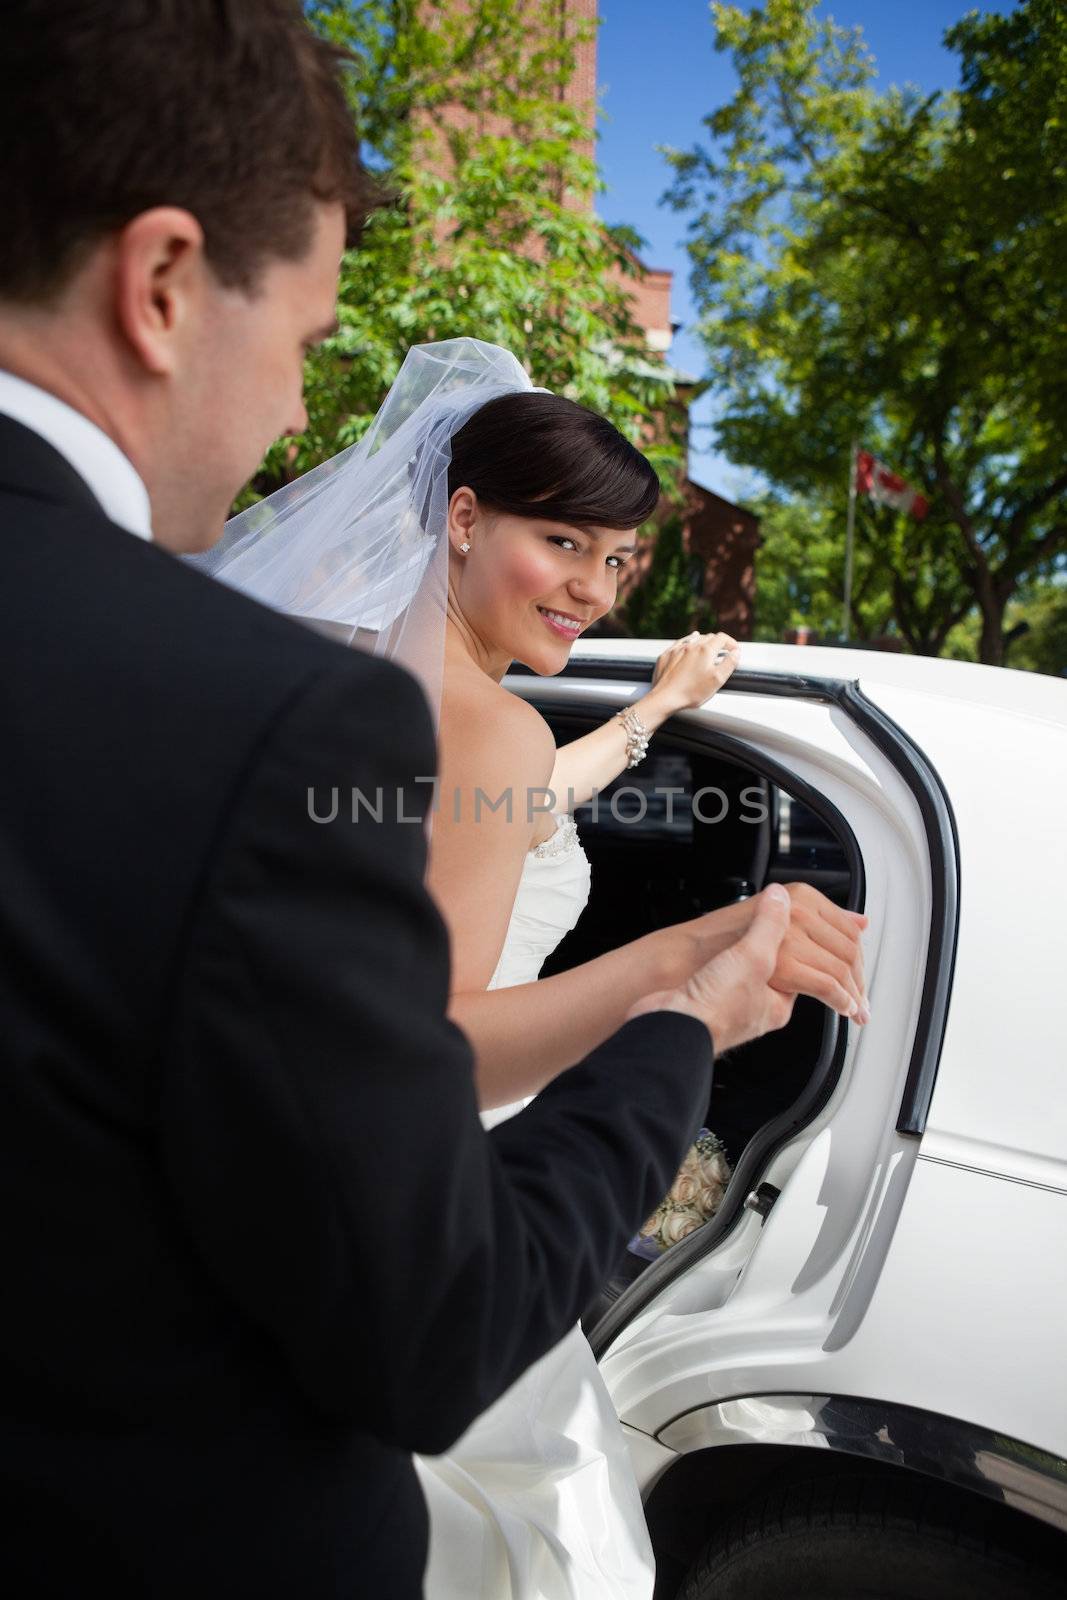 Groom helping bride into limousine